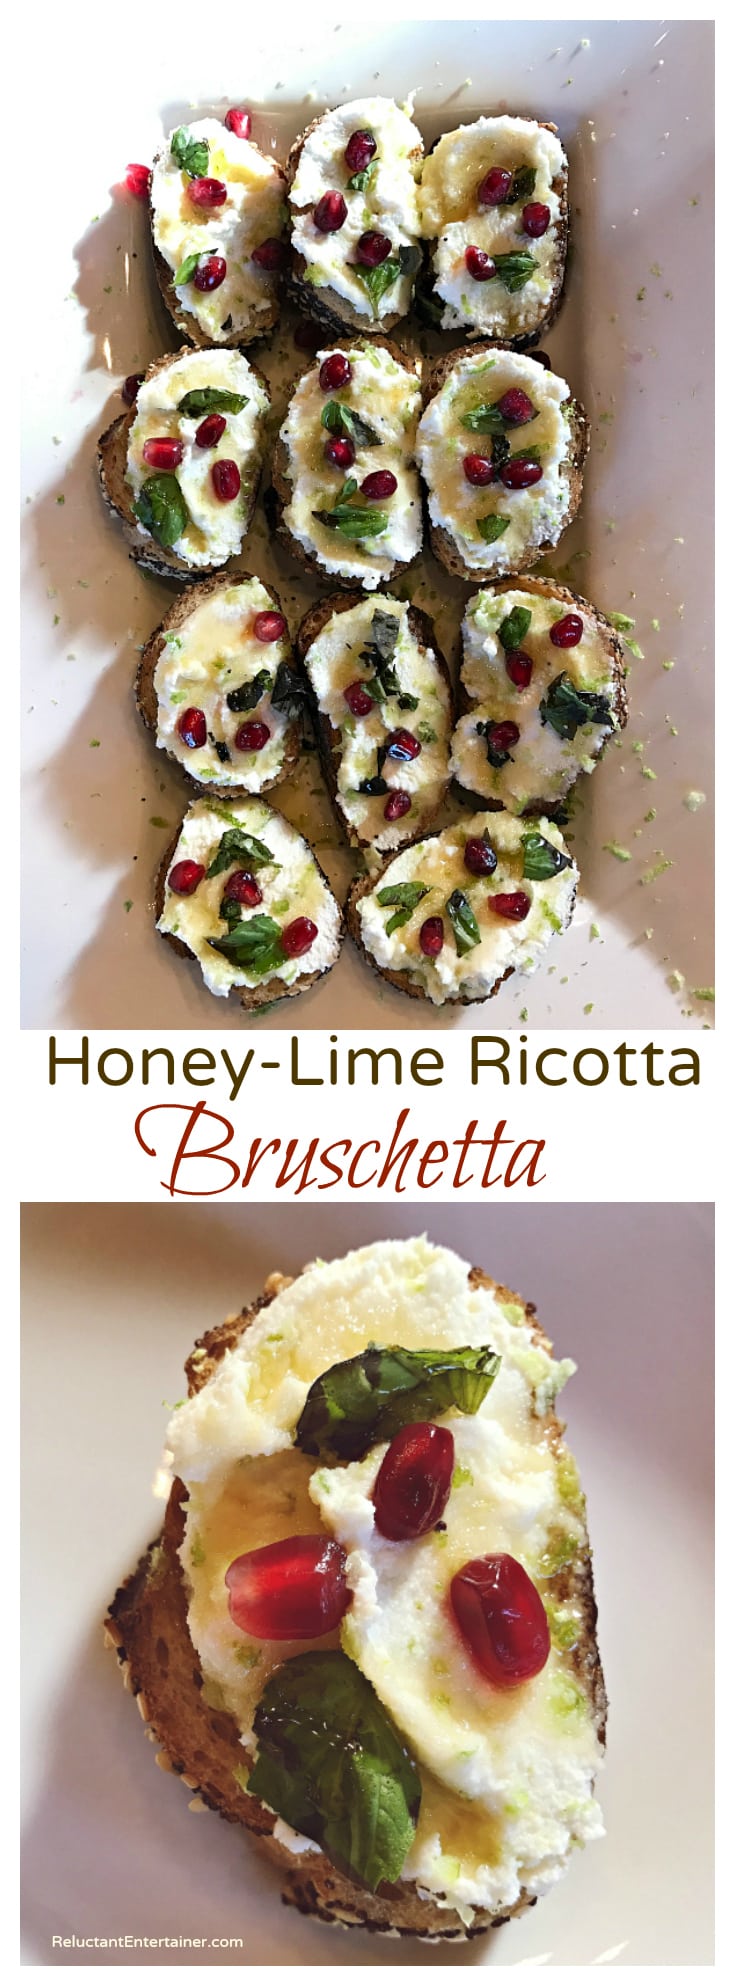 Honey-Lime Ricotta Bruschetta Recipe